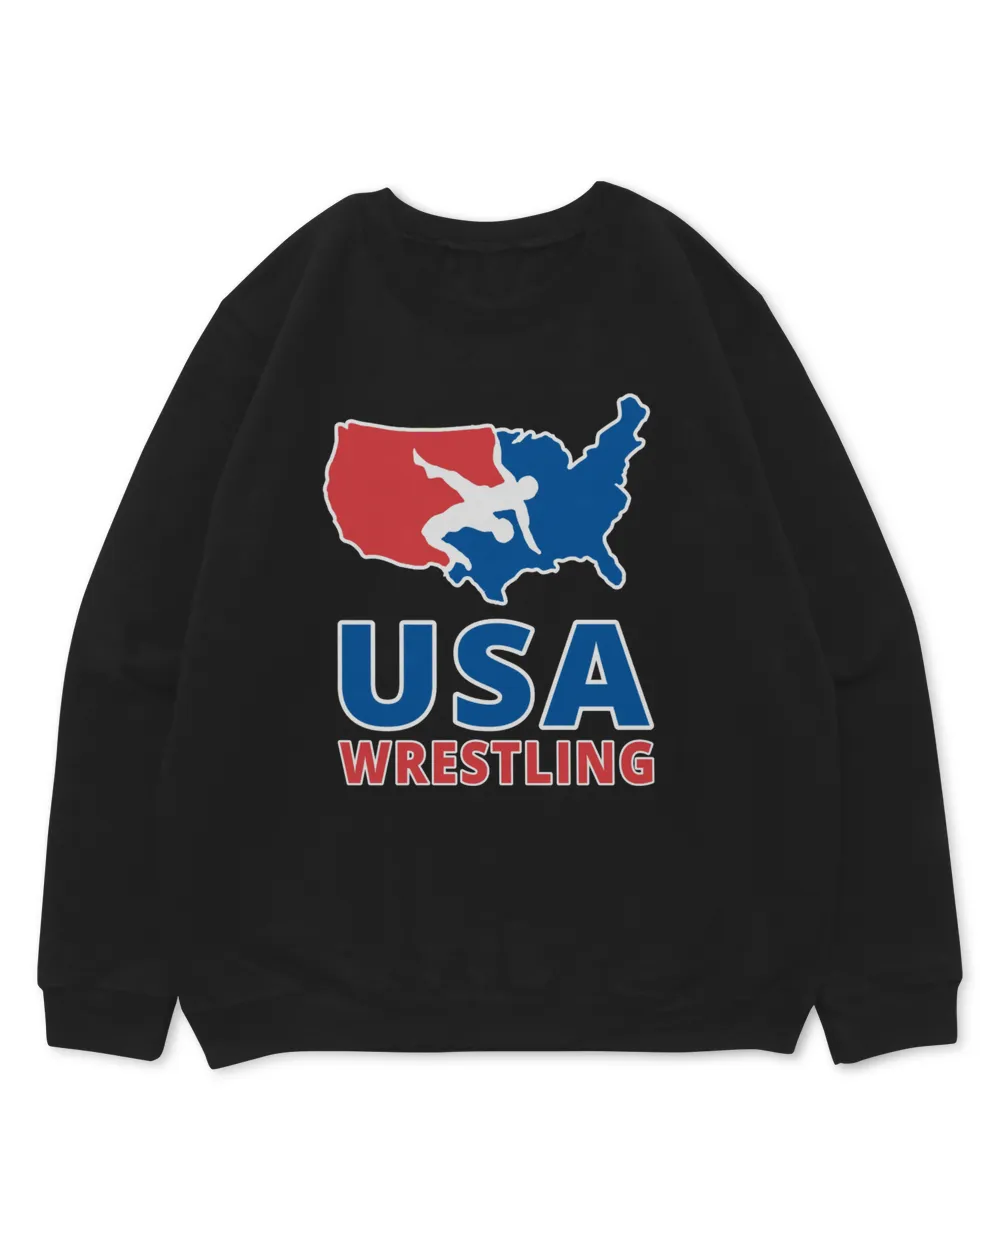 Usa Wrestling T-Shirt